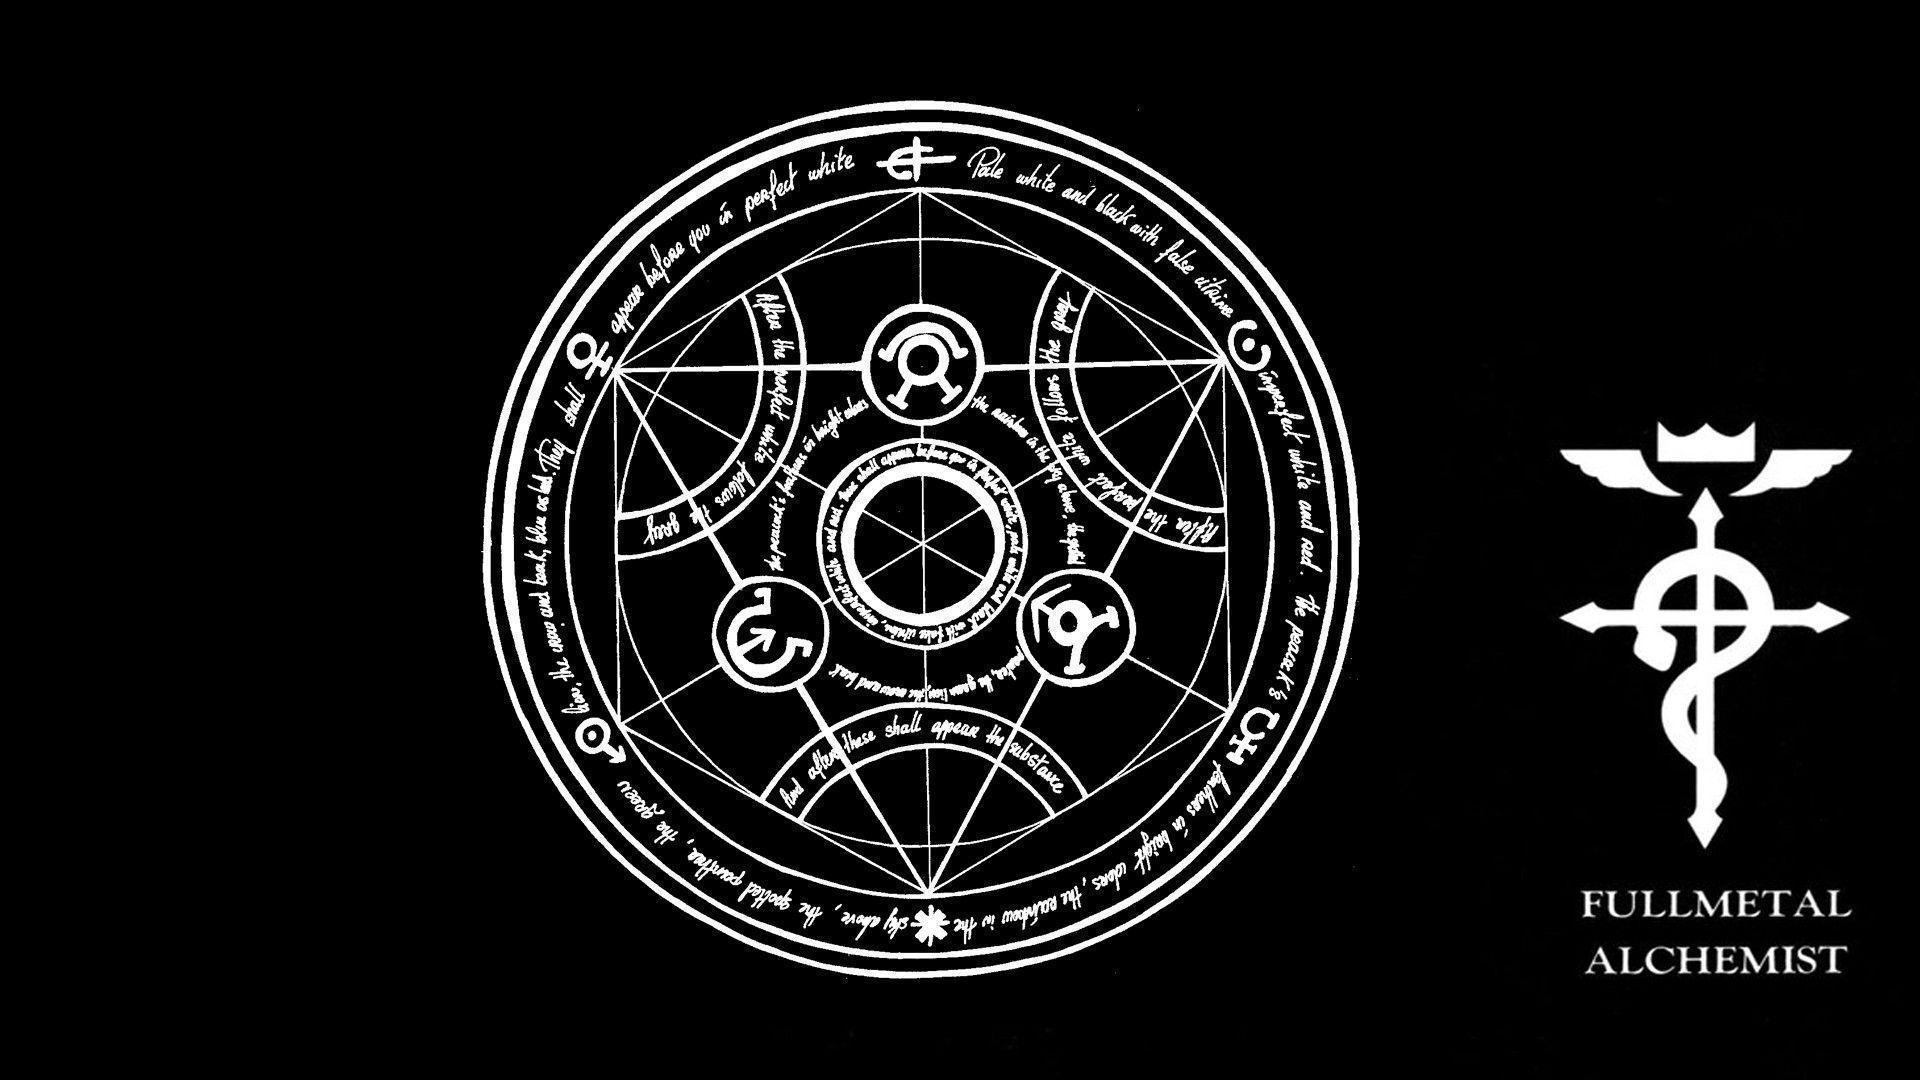 Wallpapers For > Fullmetal Alchemist Wallpapers Logo